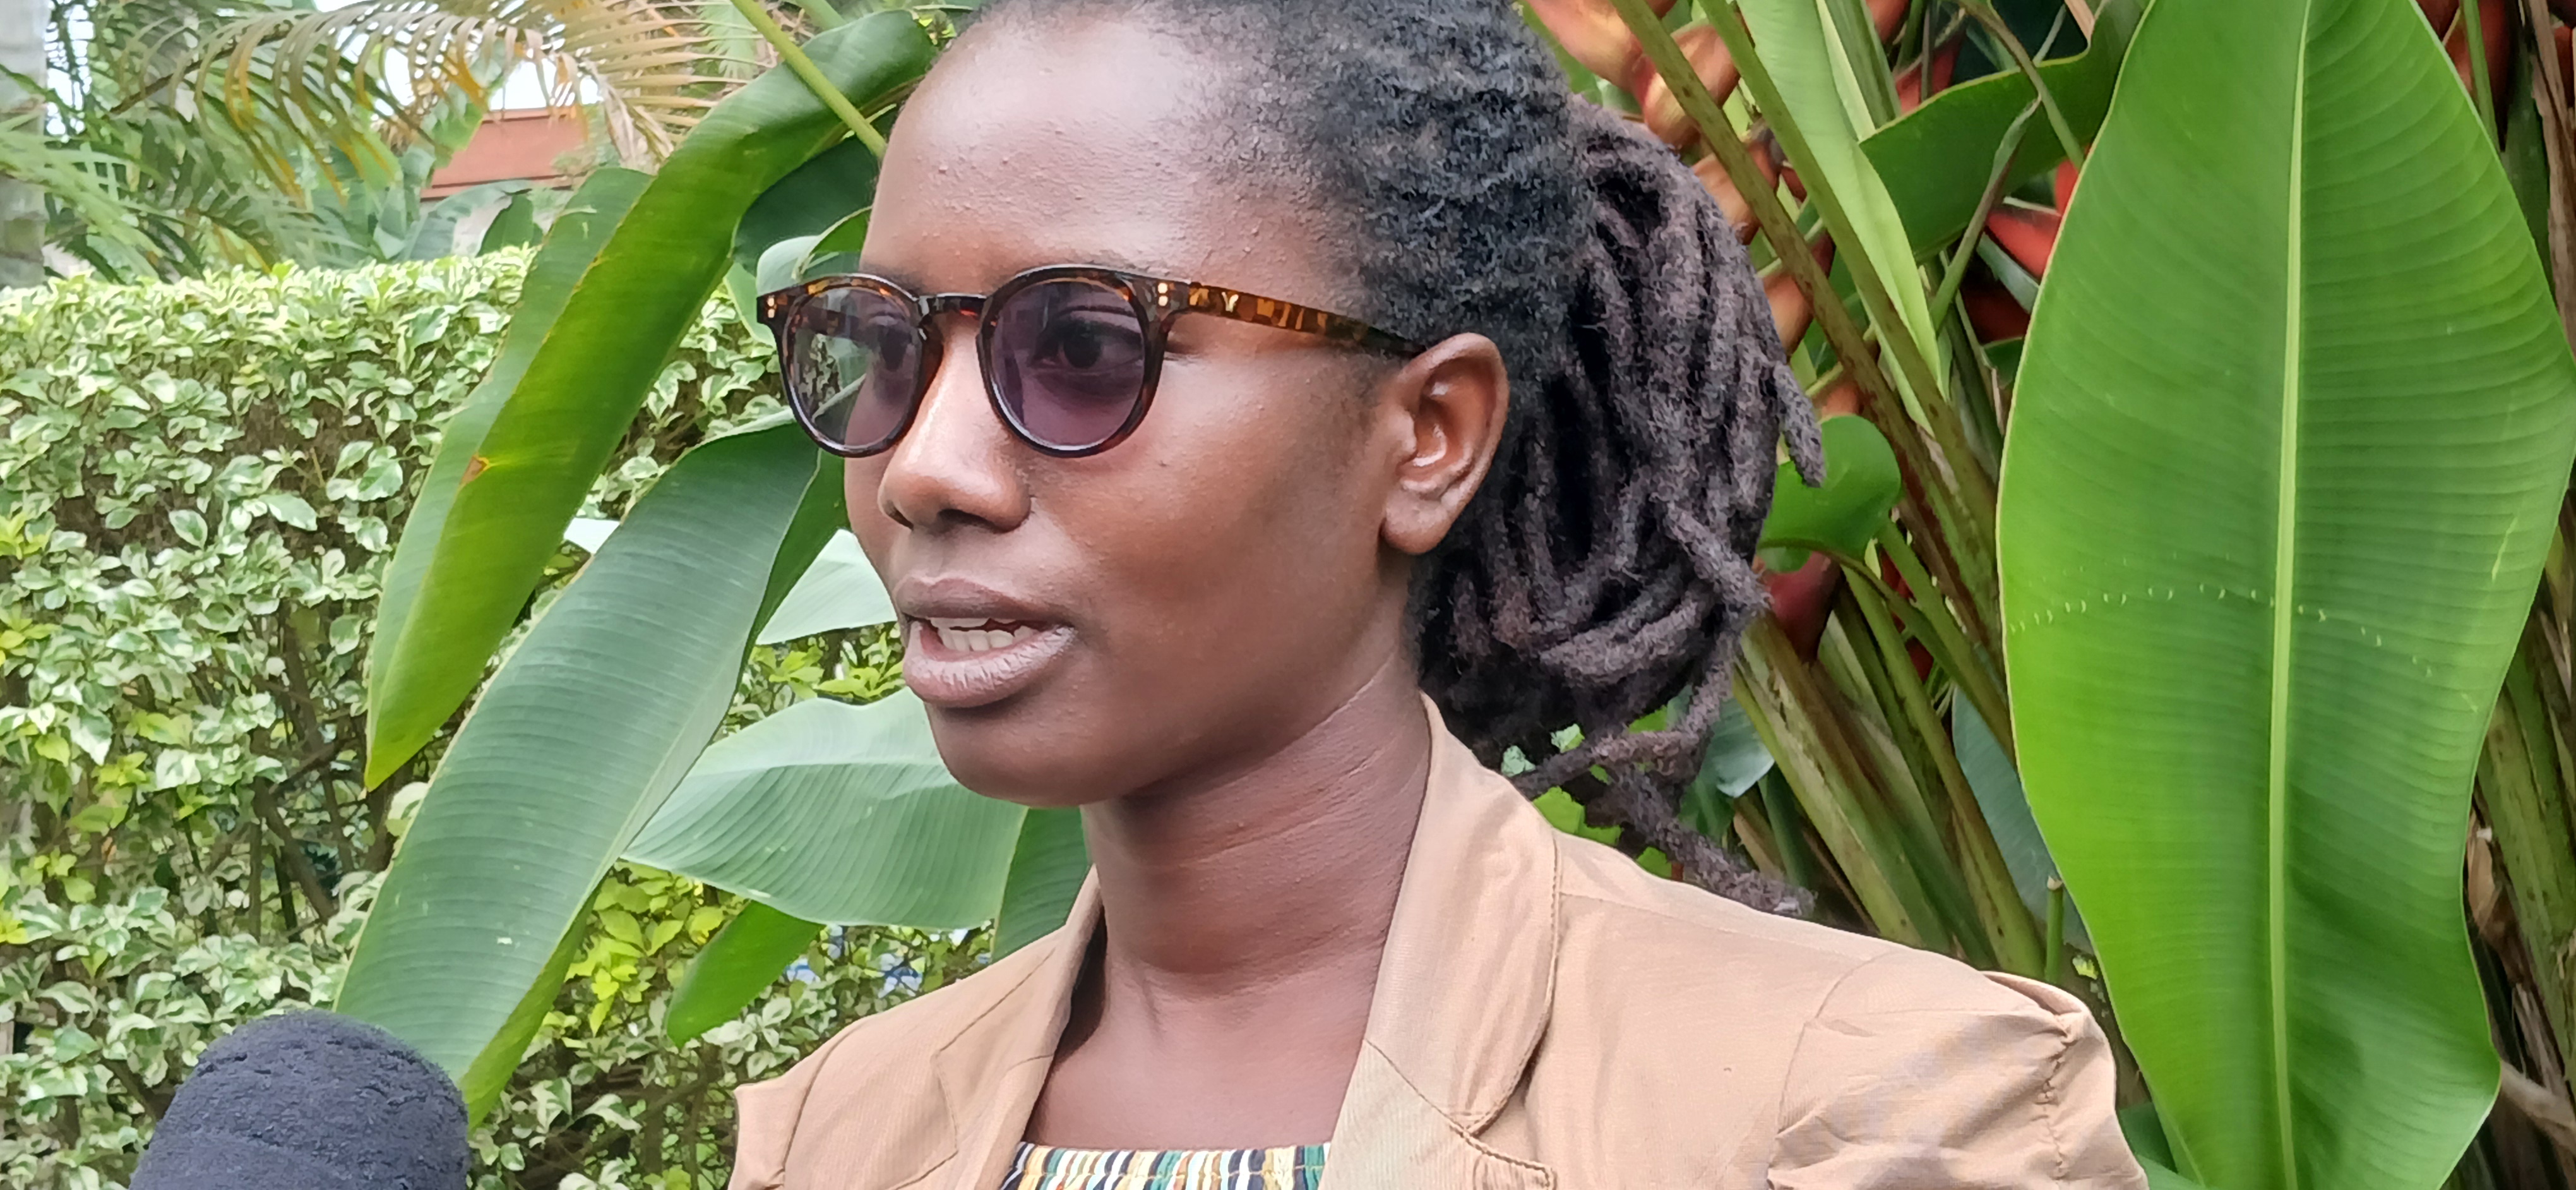 Niyonsenga Marie Claire umuganga w'abarwayi b'imidido